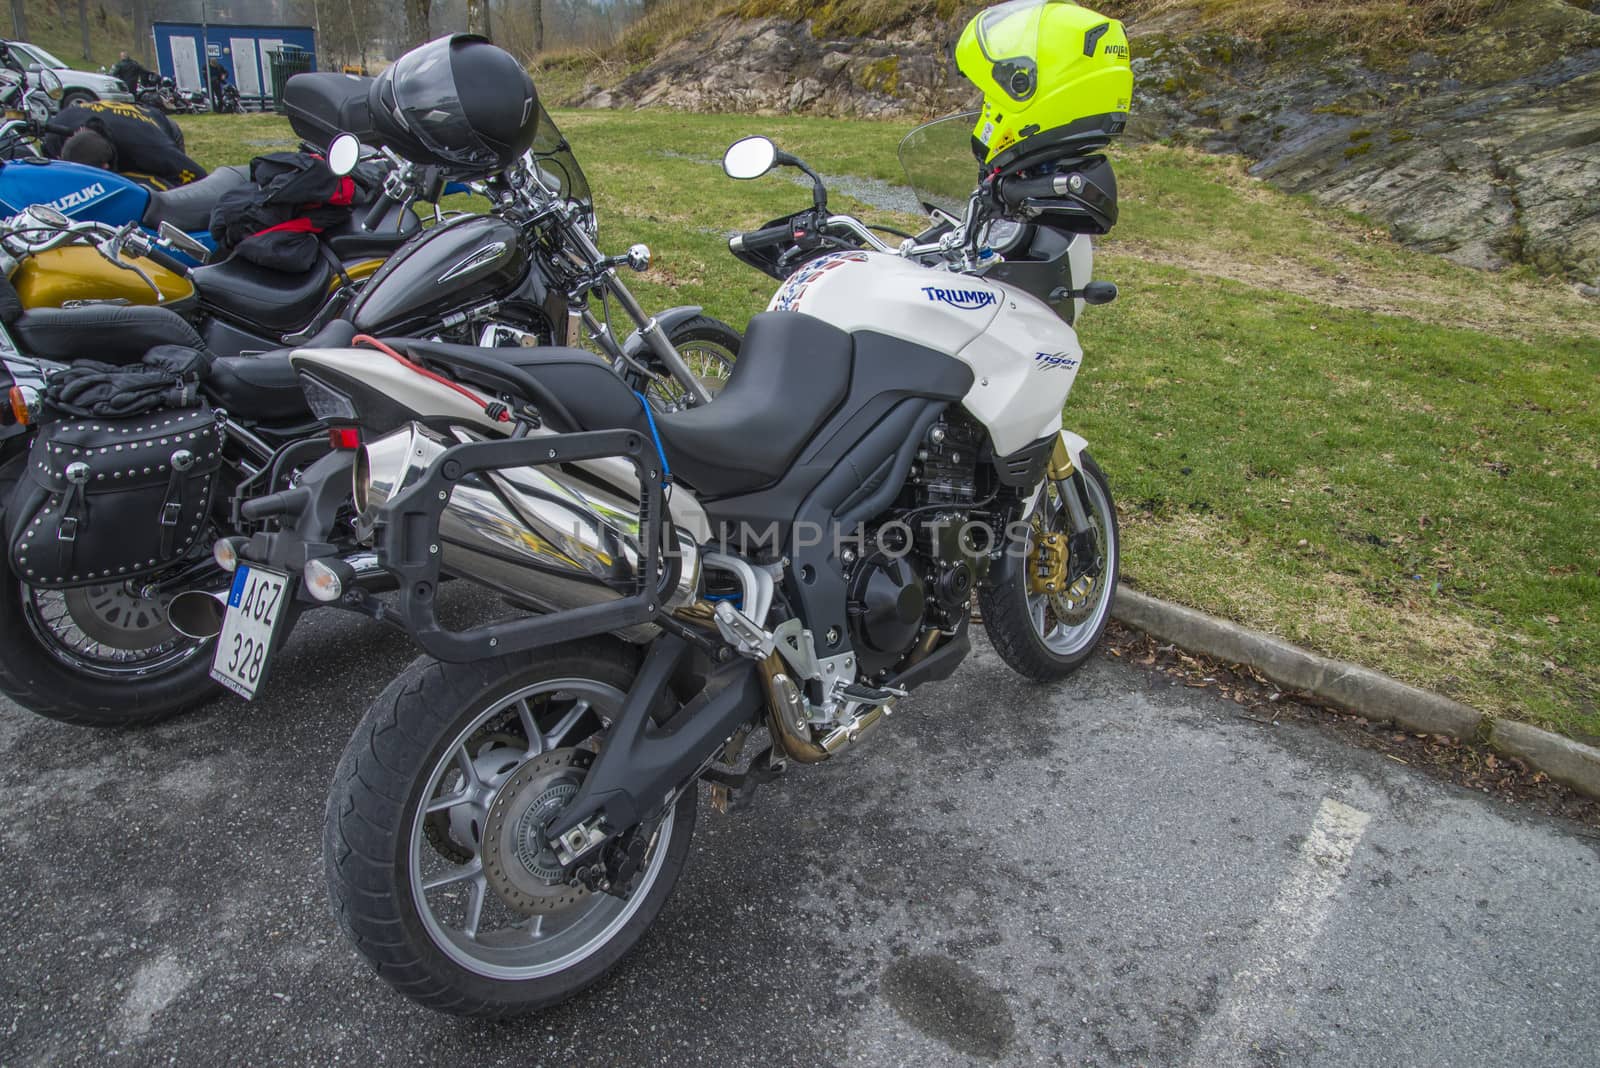 motorbike meeting at fredriksten fortress, triumph tiger 1050 by steirus